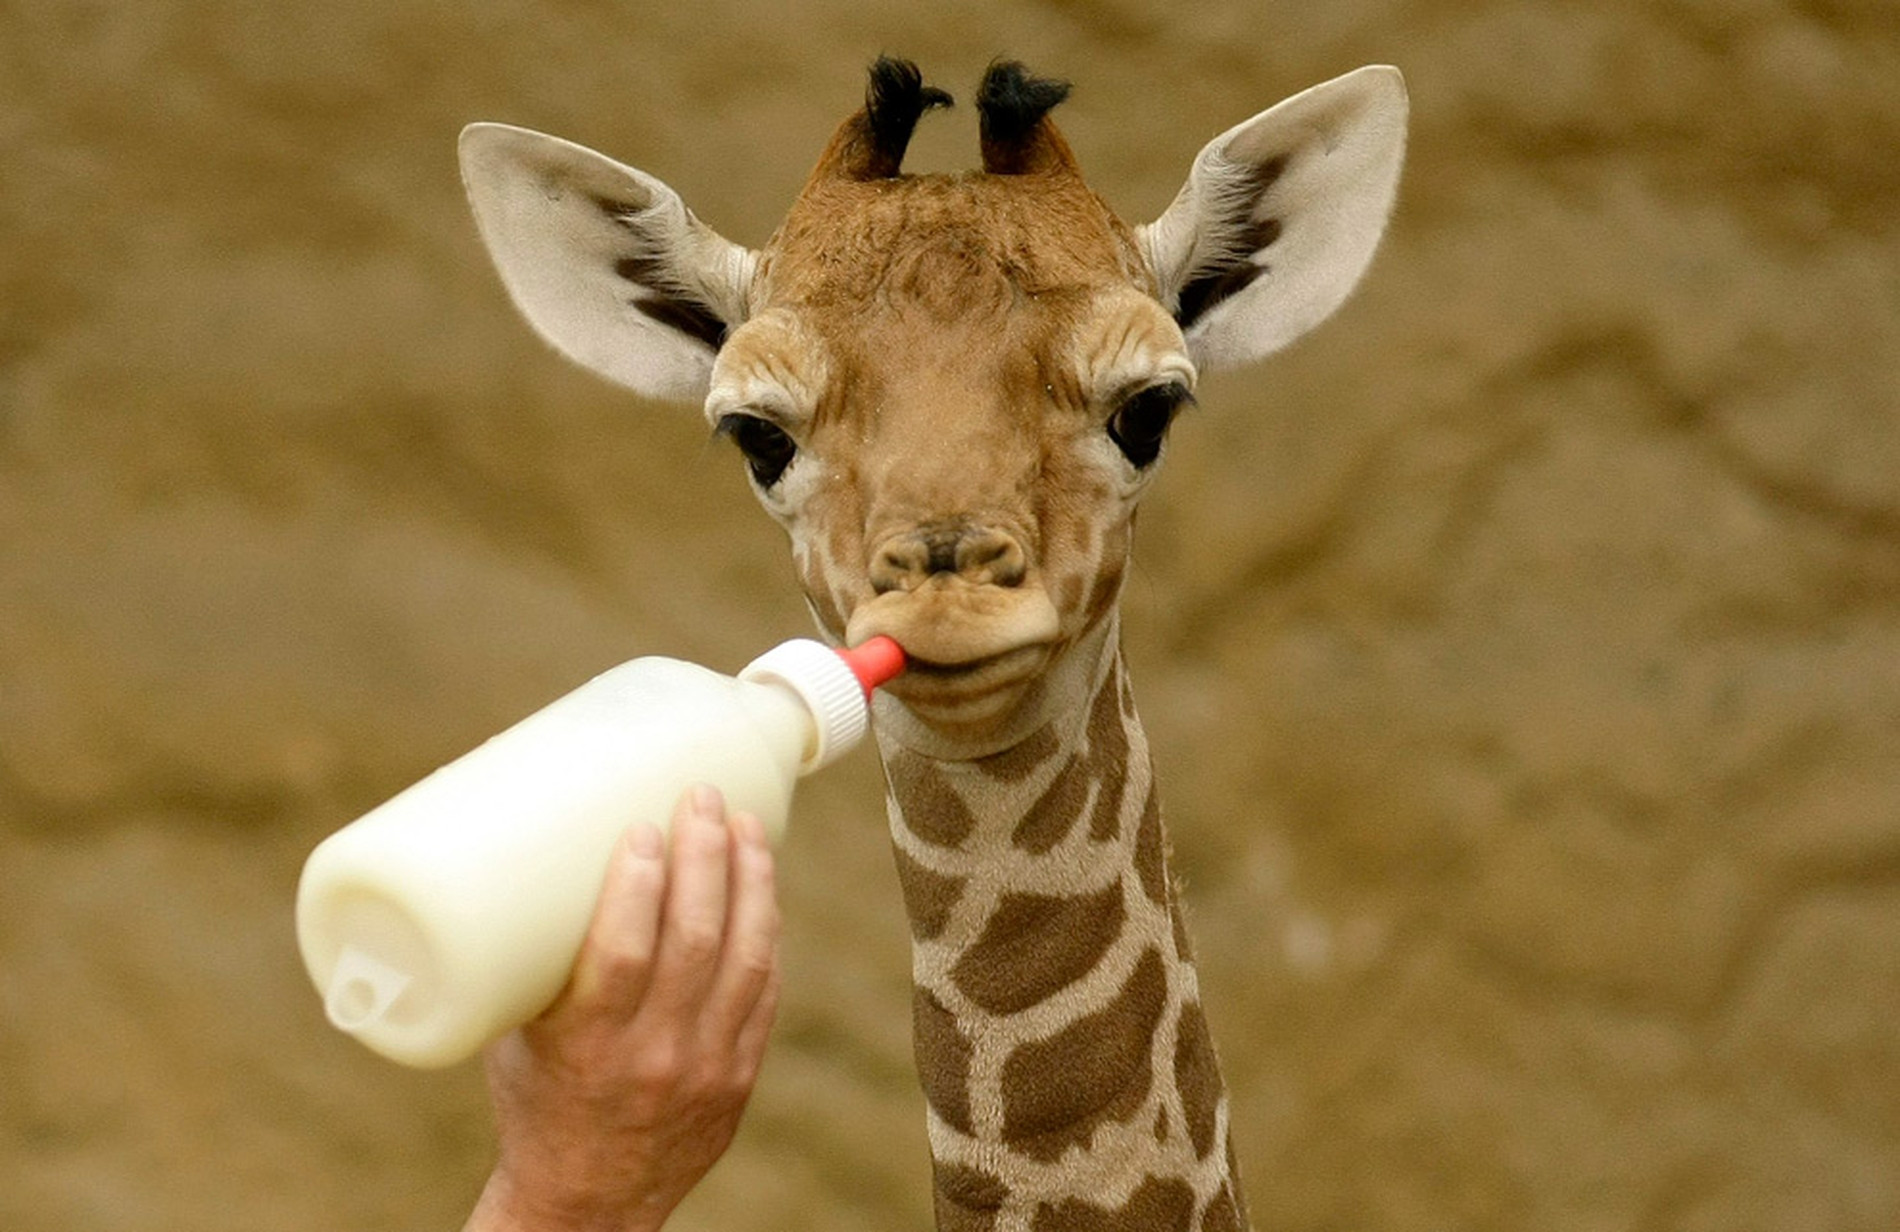 http://silkyglobe.com/img/2015/04/Baby-giraffe-.jpg